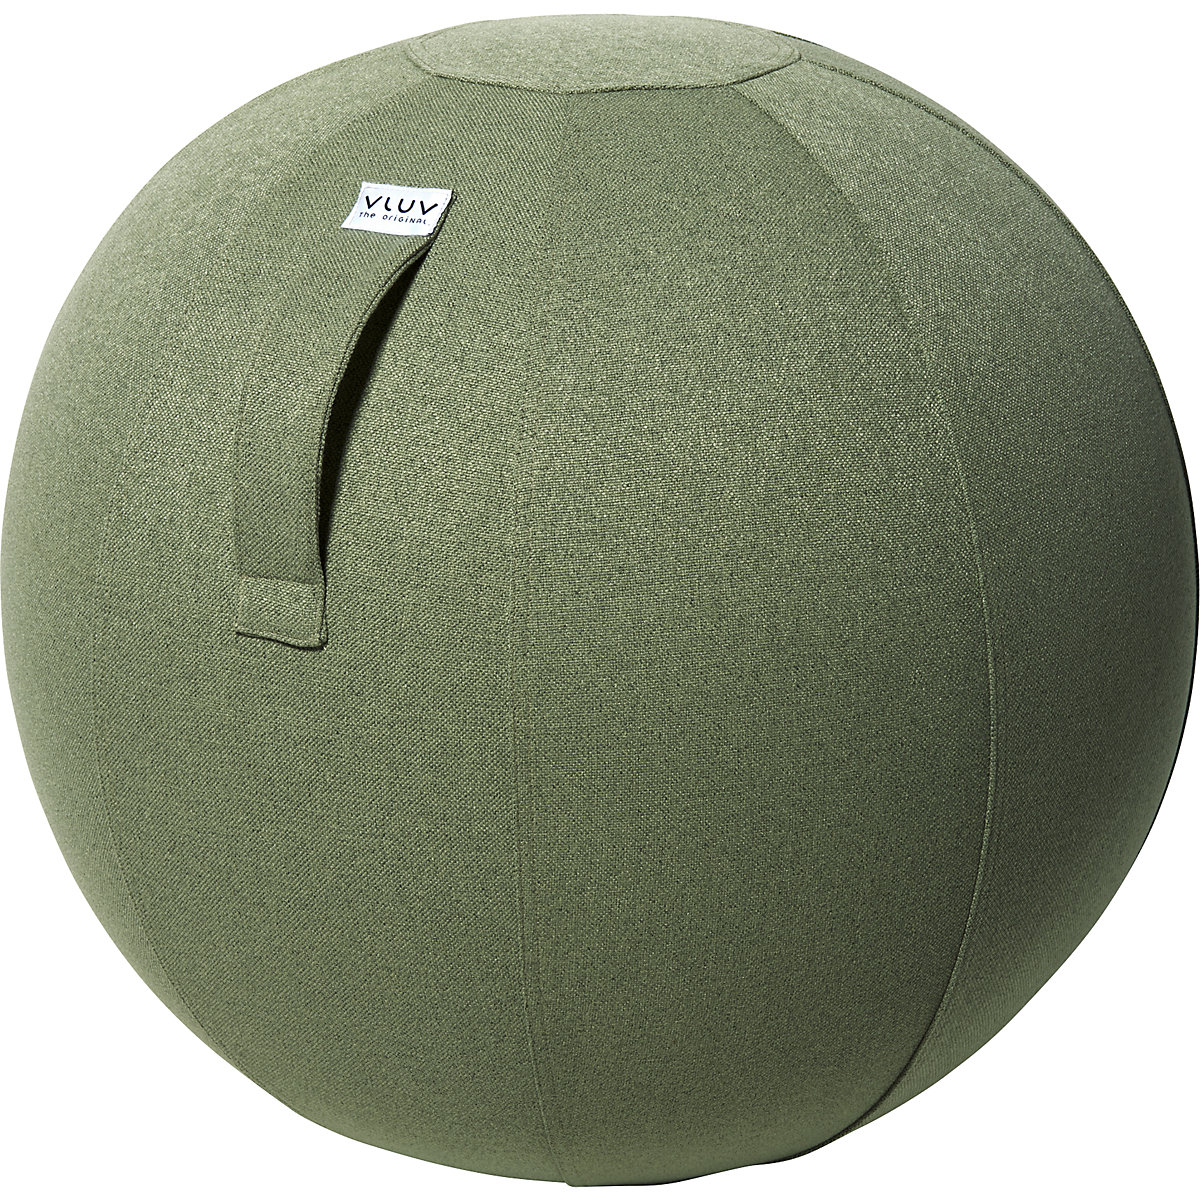 Piłka do siedzenia SOVA – VLUV, tkanina w odcieniach naturalnych, 600 – 650 mm, zielone pesto-13